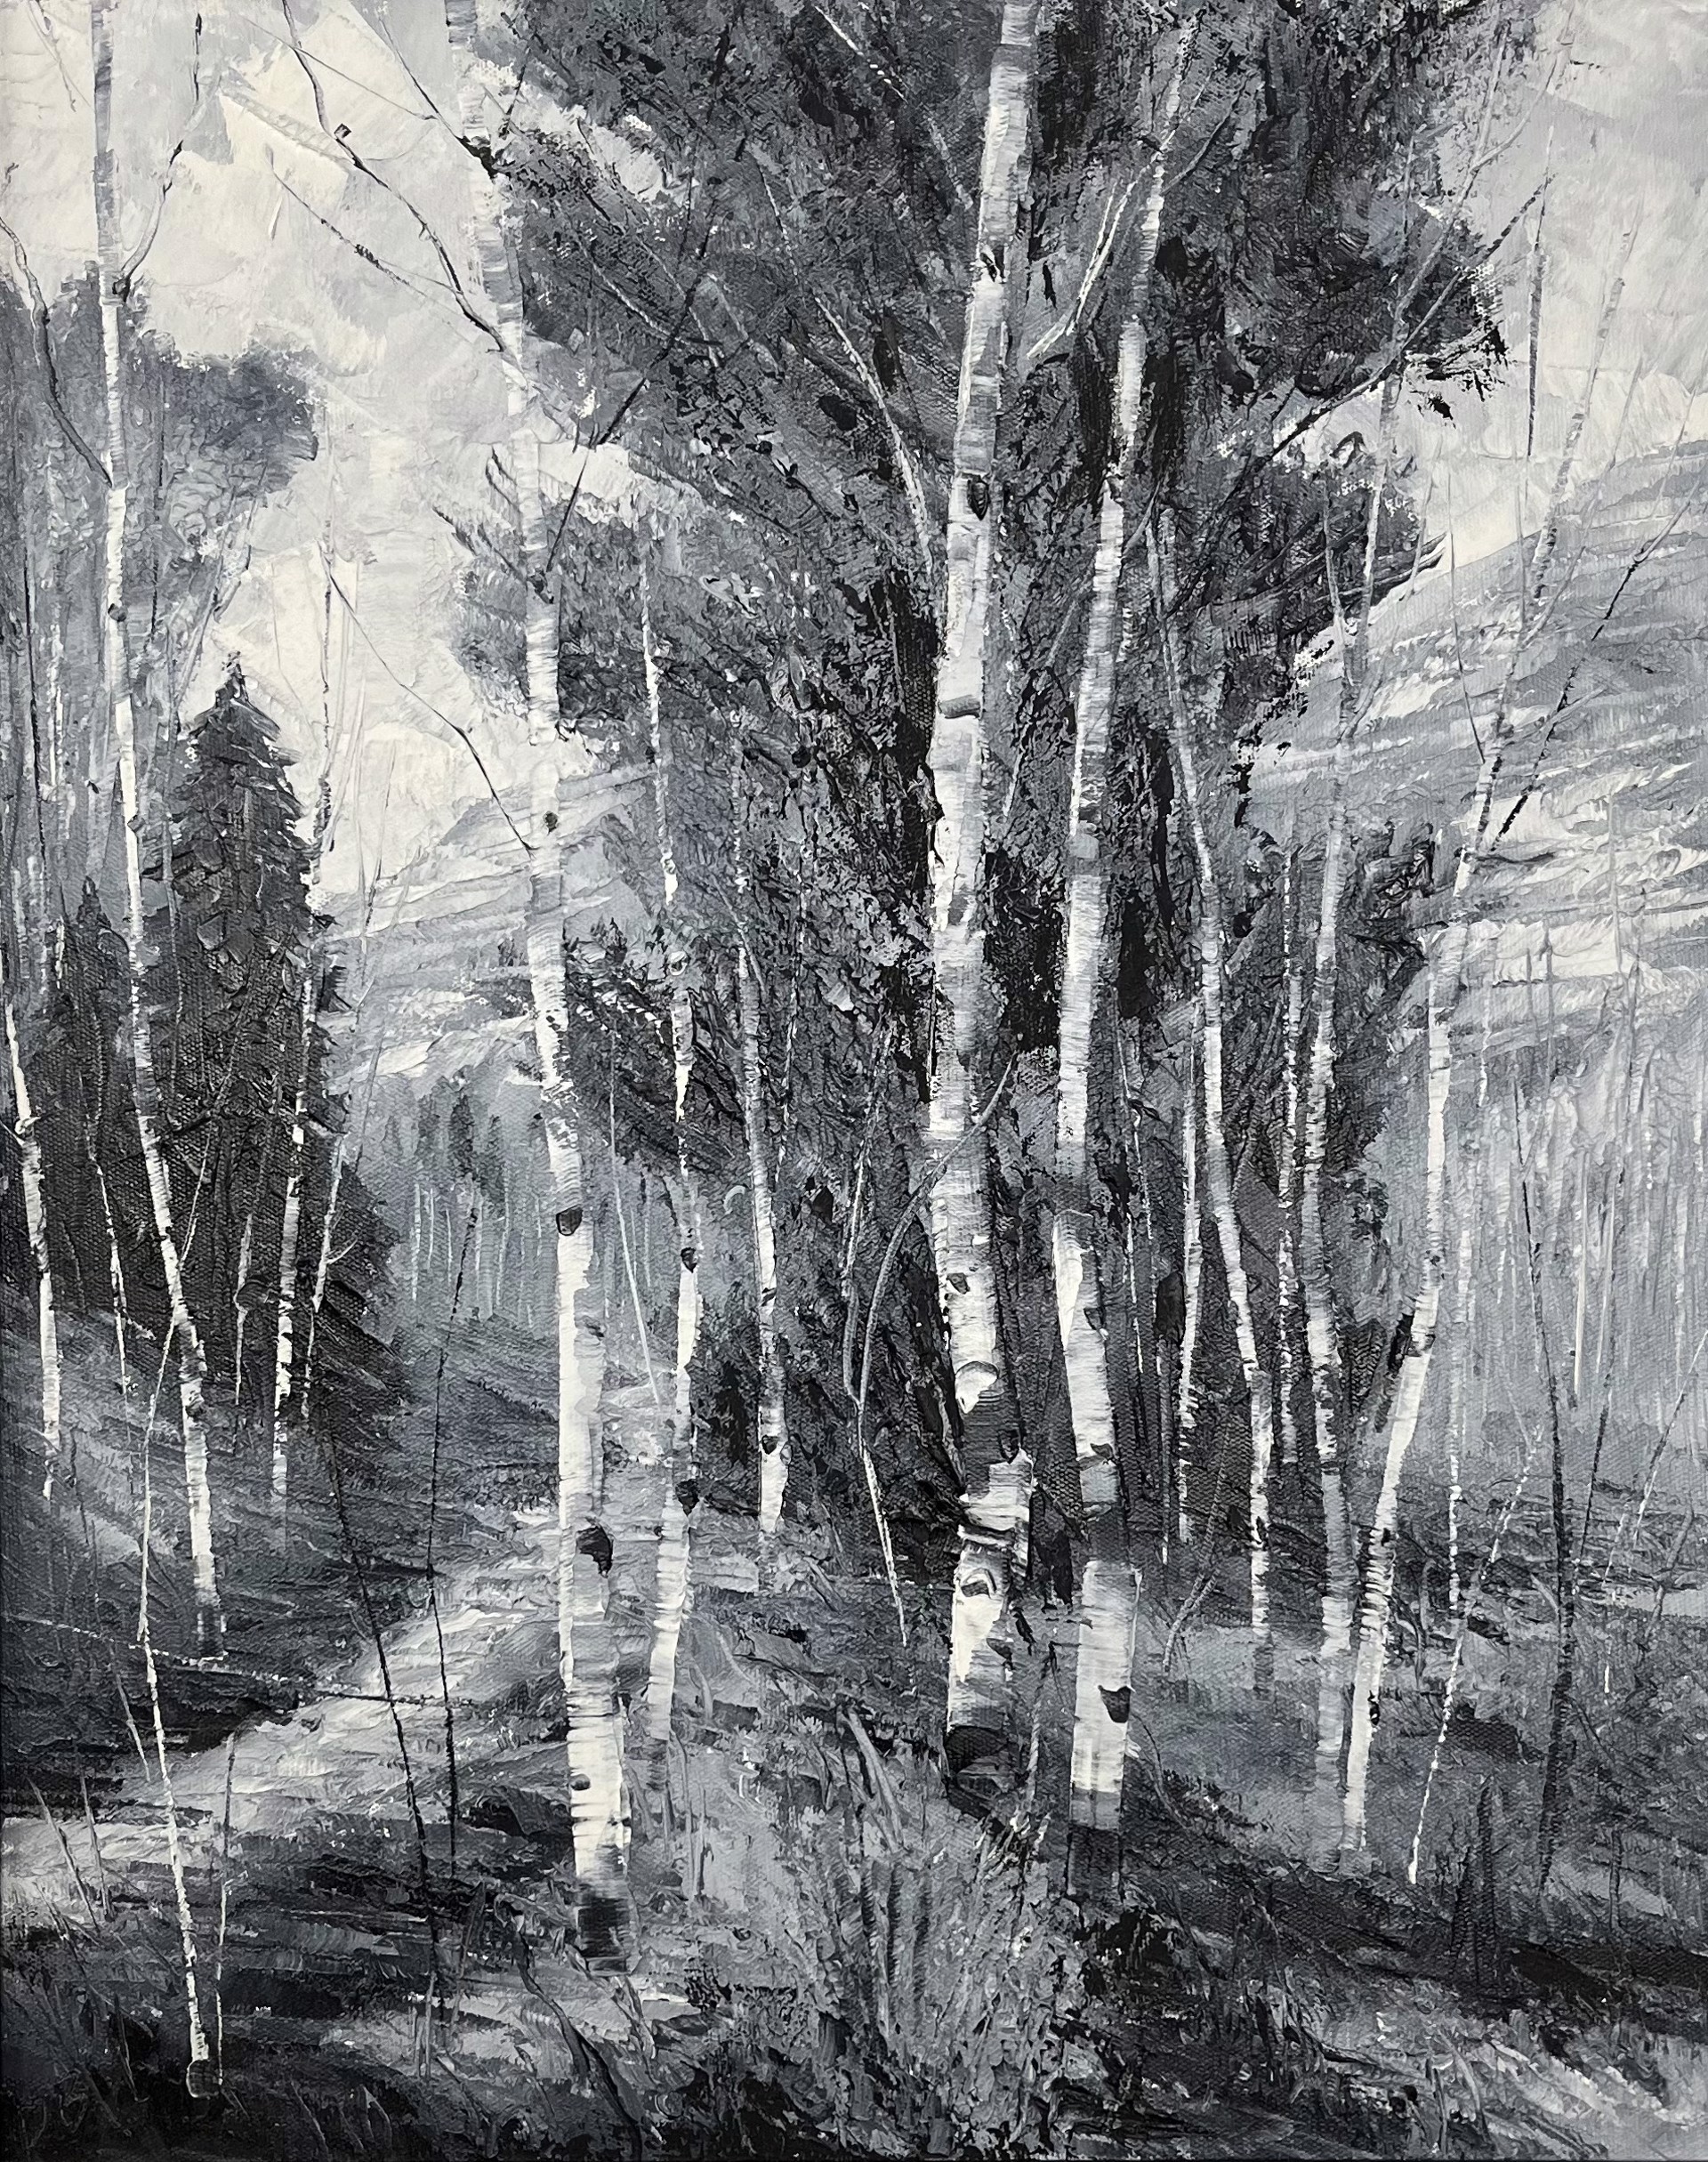 Forest Study in Black & White by Dean Bradshaw